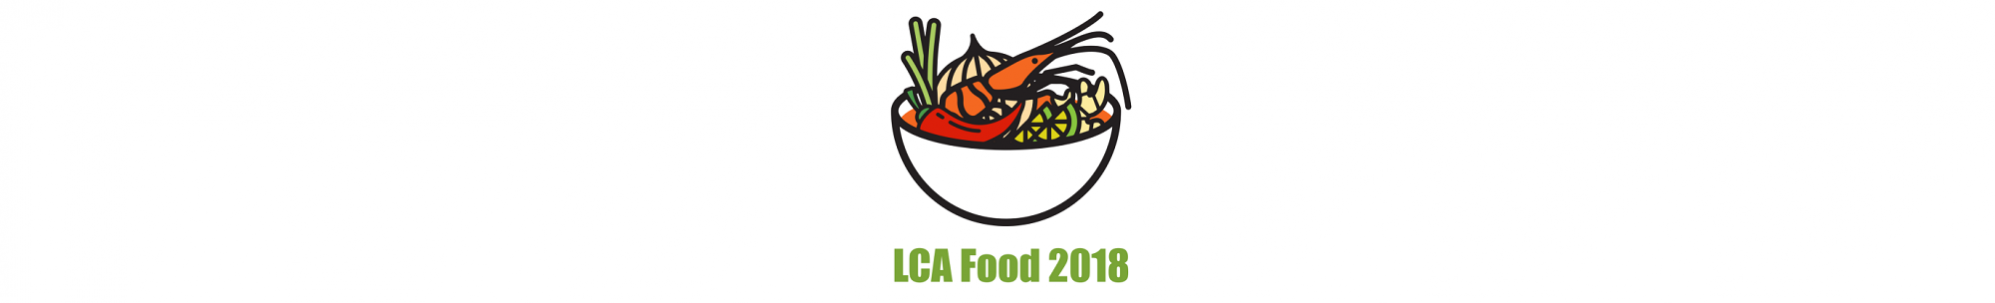 LCA-Food-2018_bandeau.png